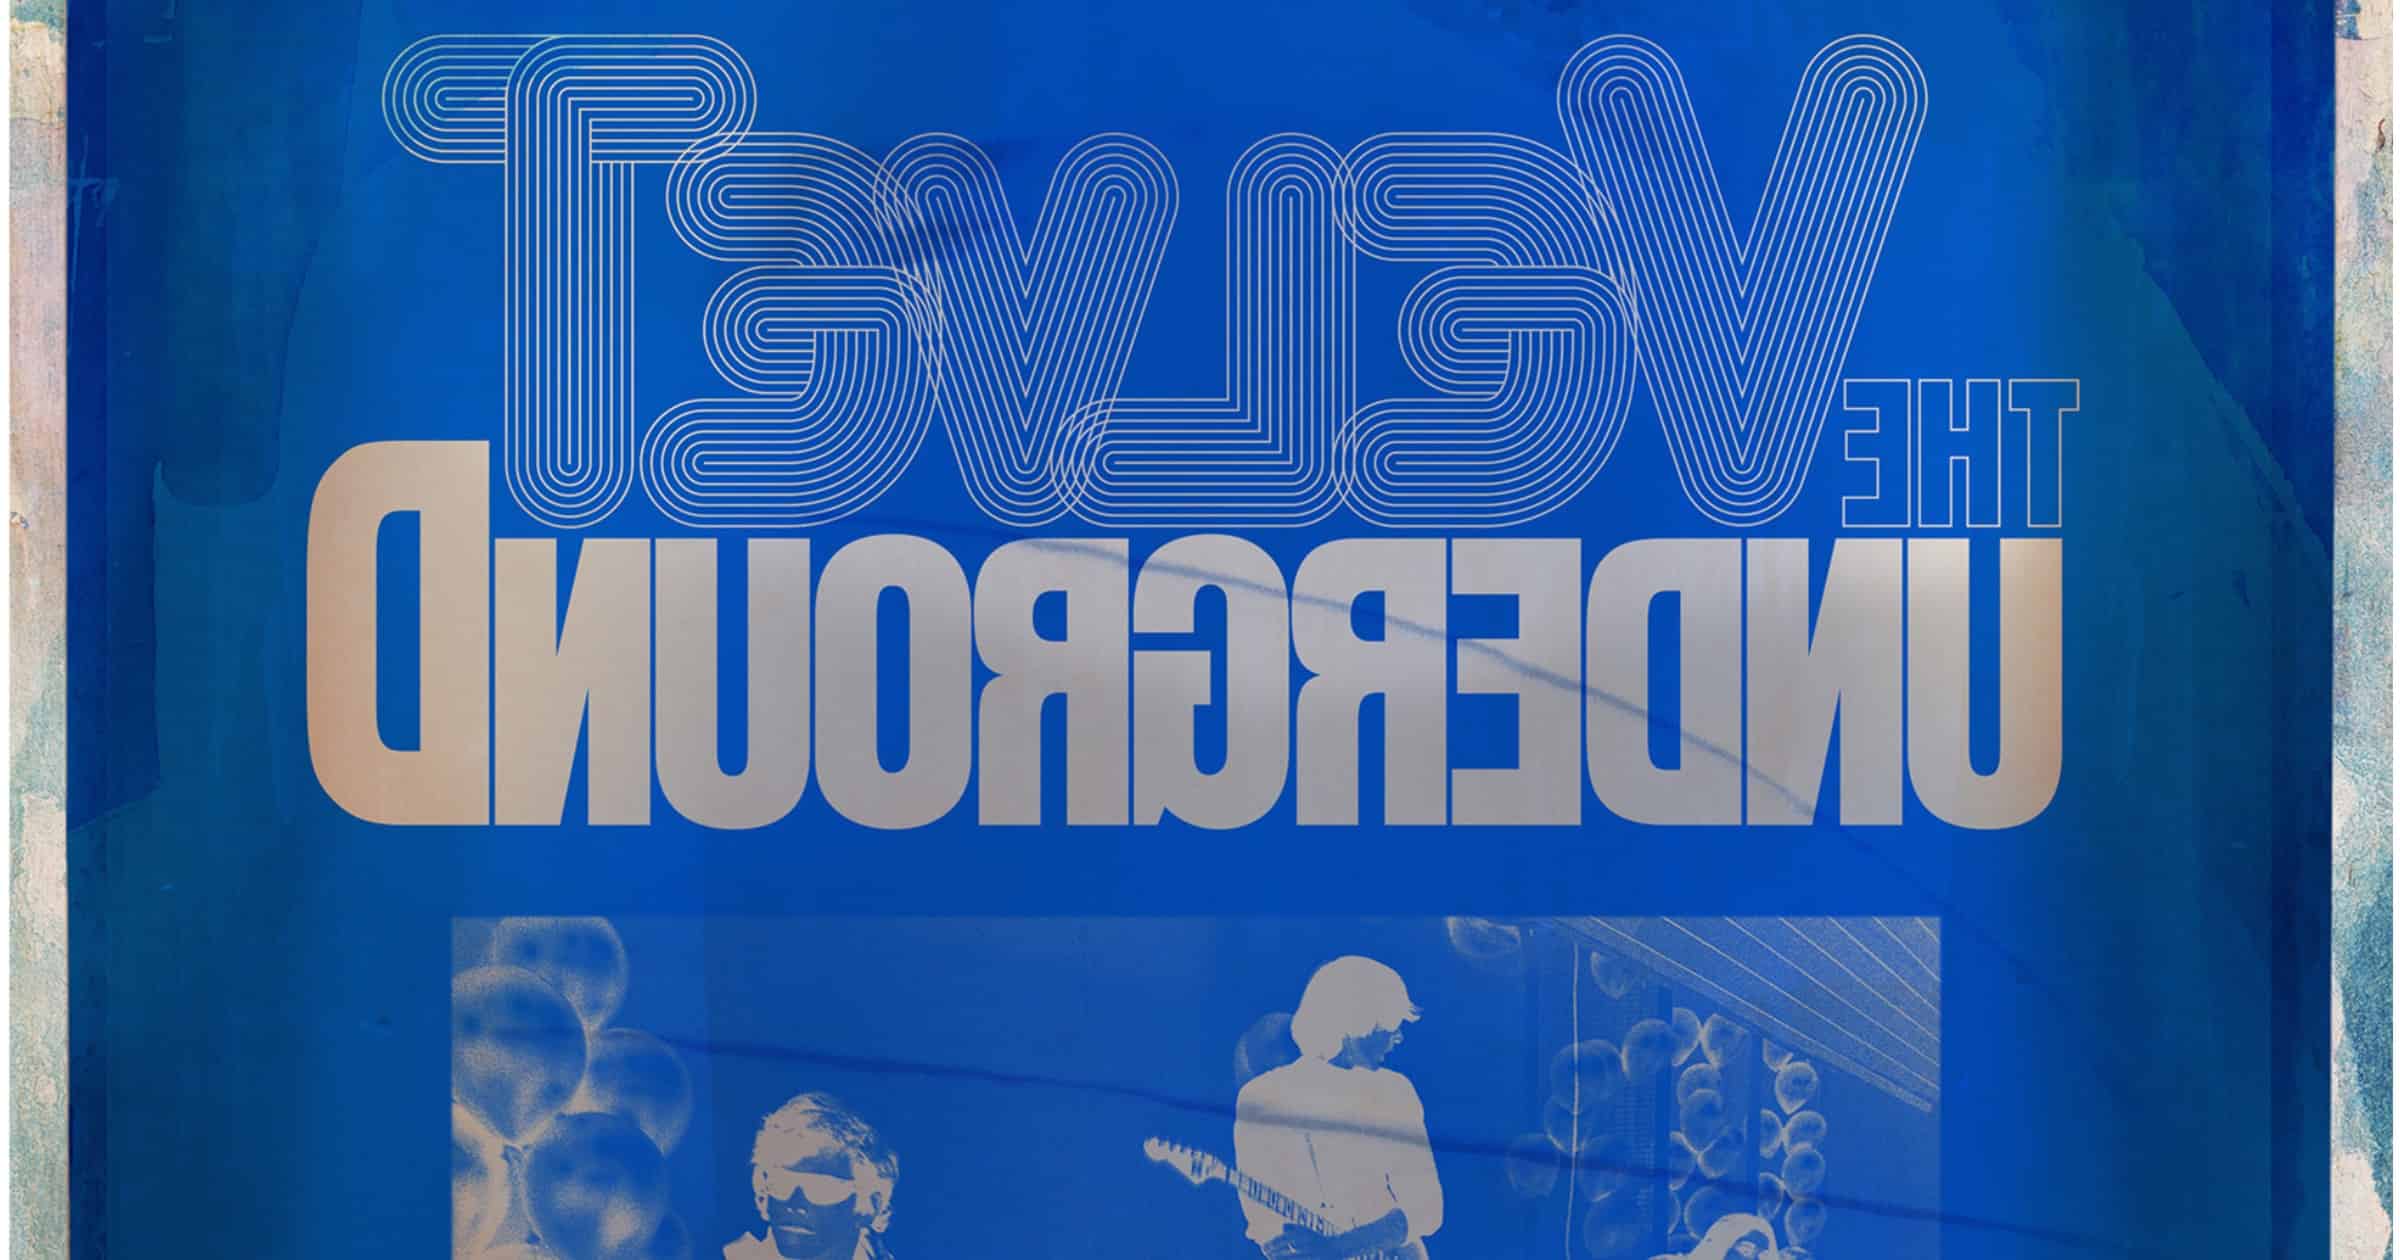 Todd Haynes ‘The Velvet Underground’ Coming to Apple TV+